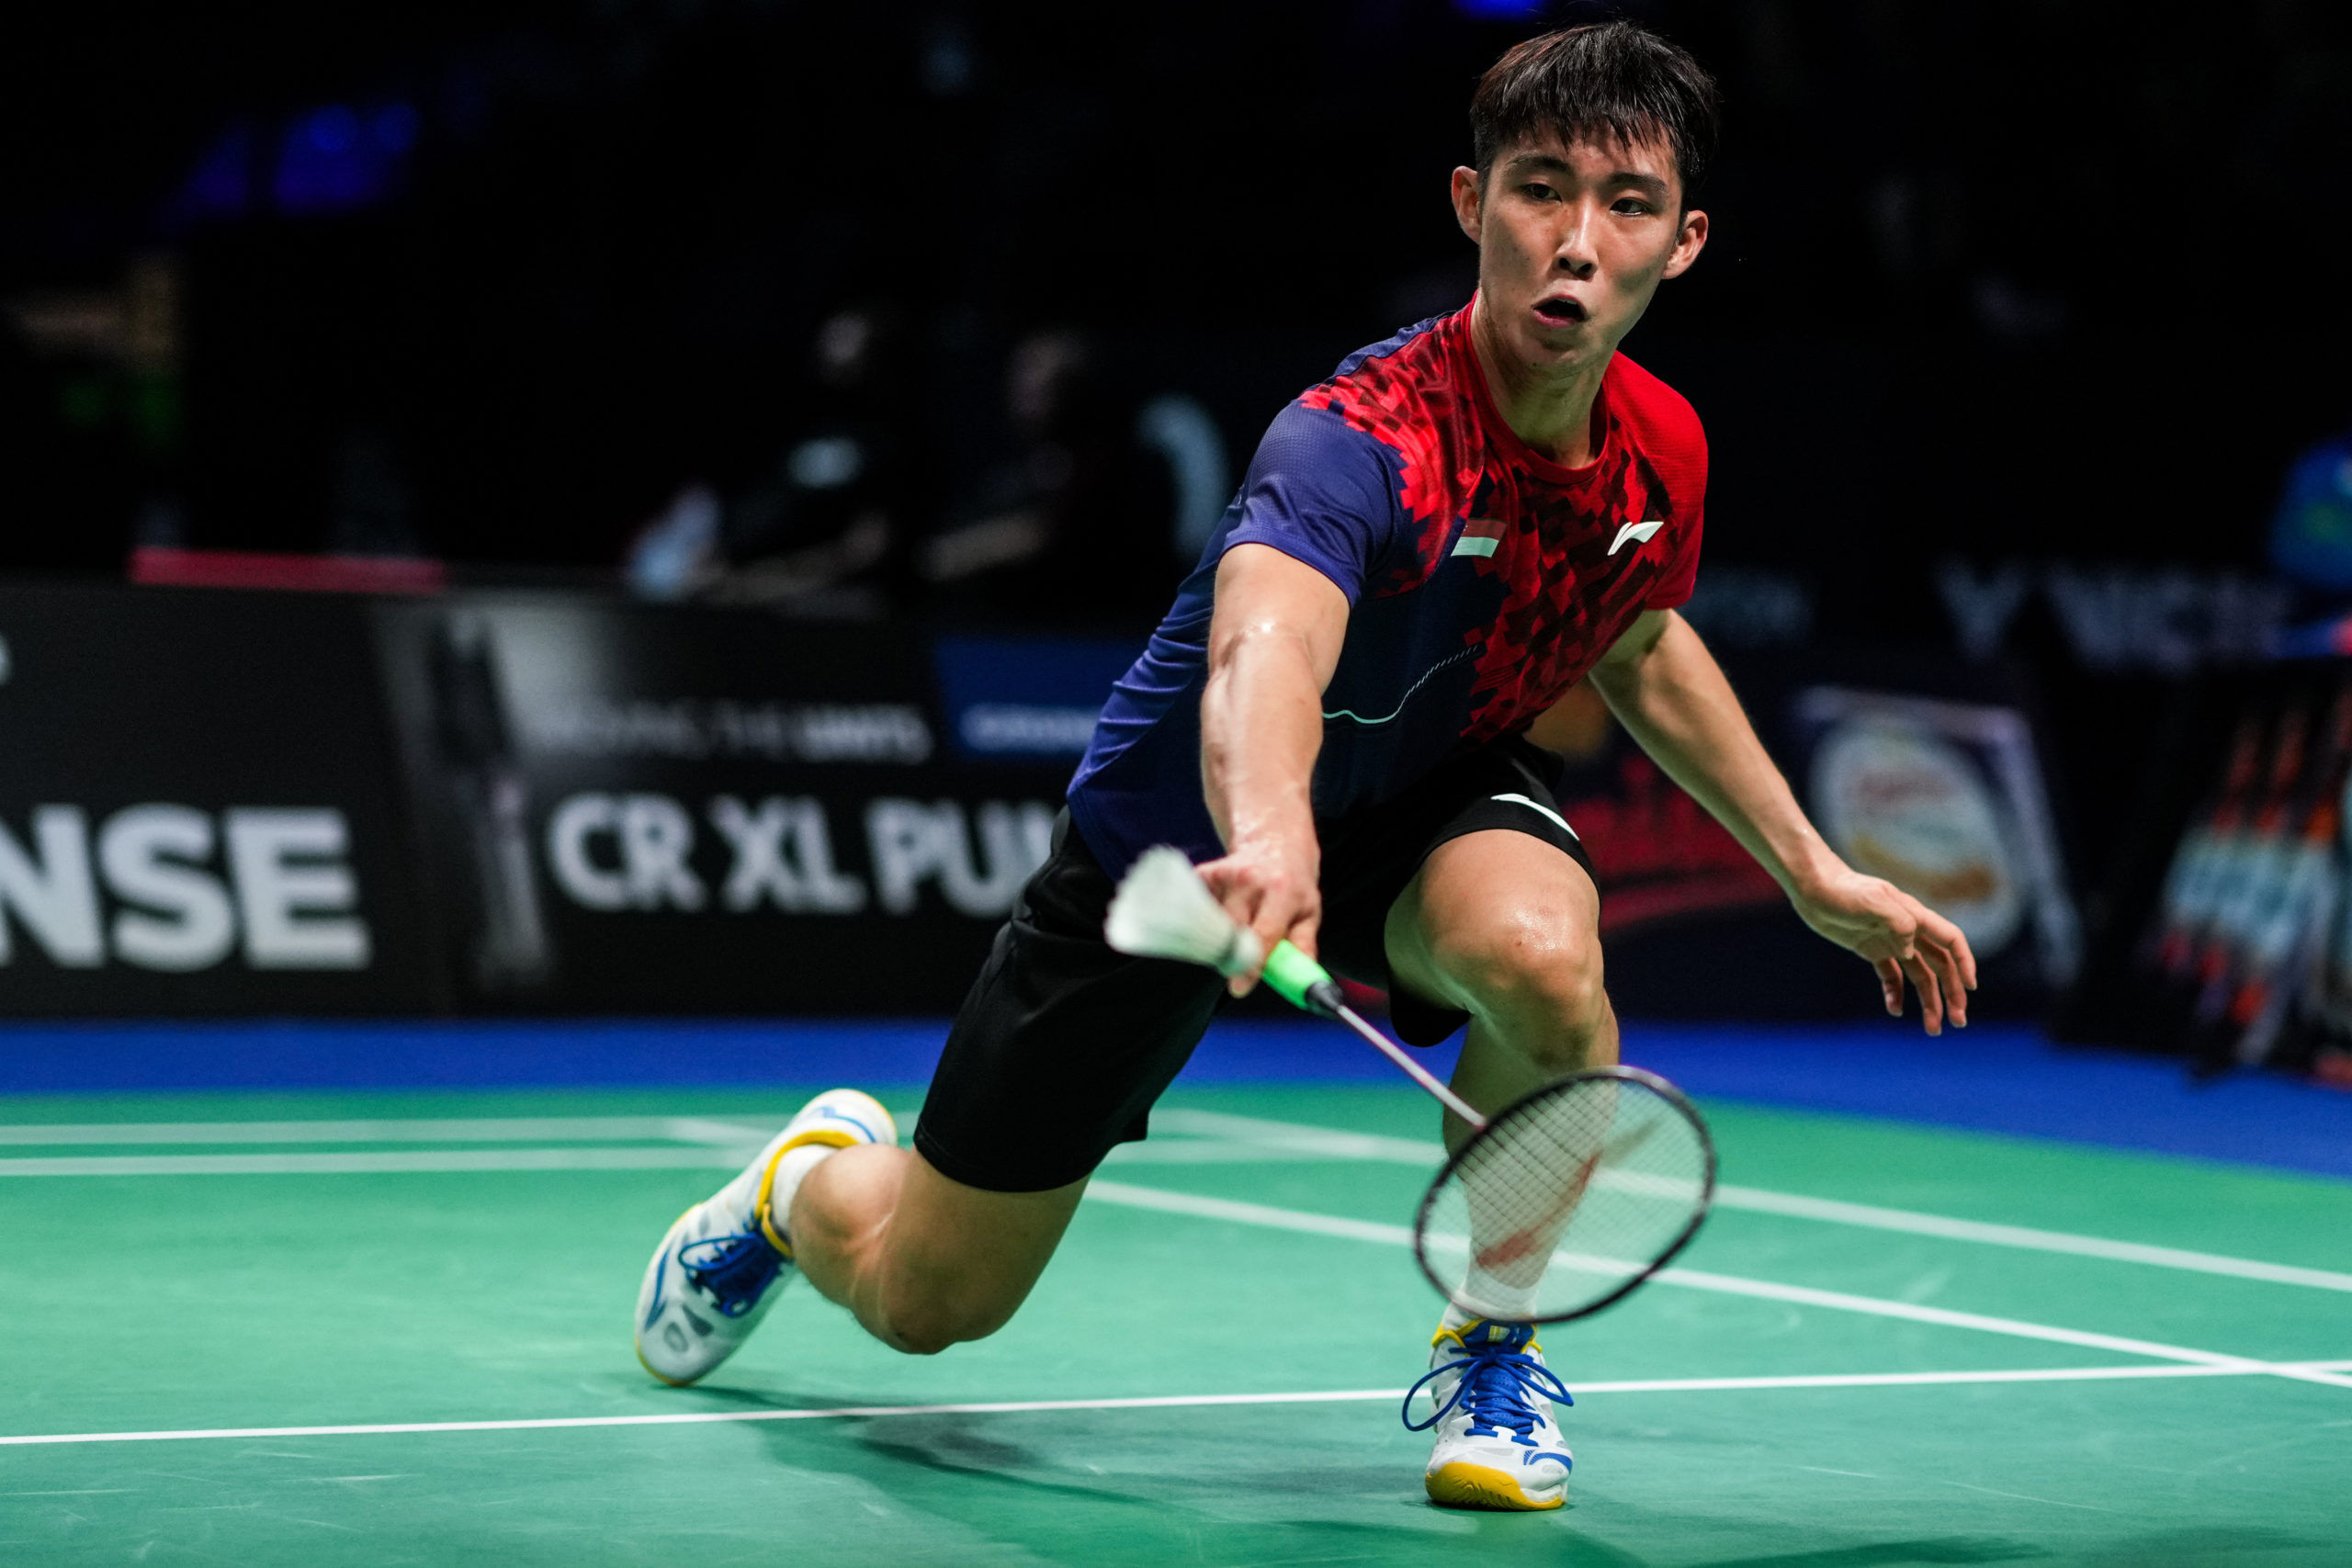 Penang-born Singaporean Loh Kean Yew is a badminton world champion